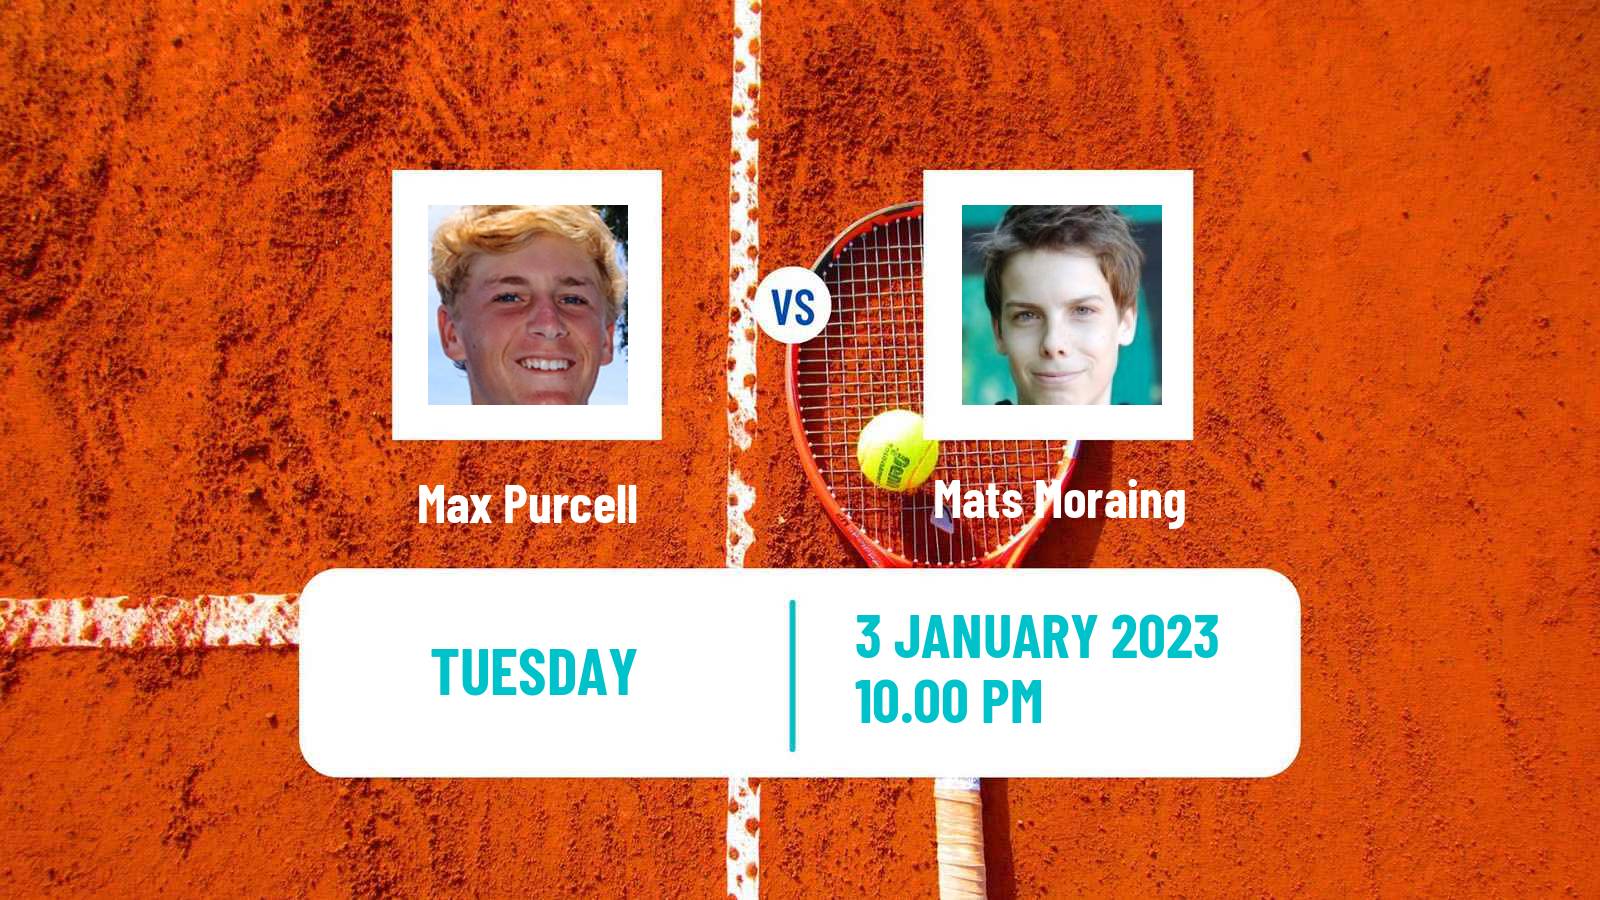 Tennis ATP Challenger Max Purcell - Mats Moraing